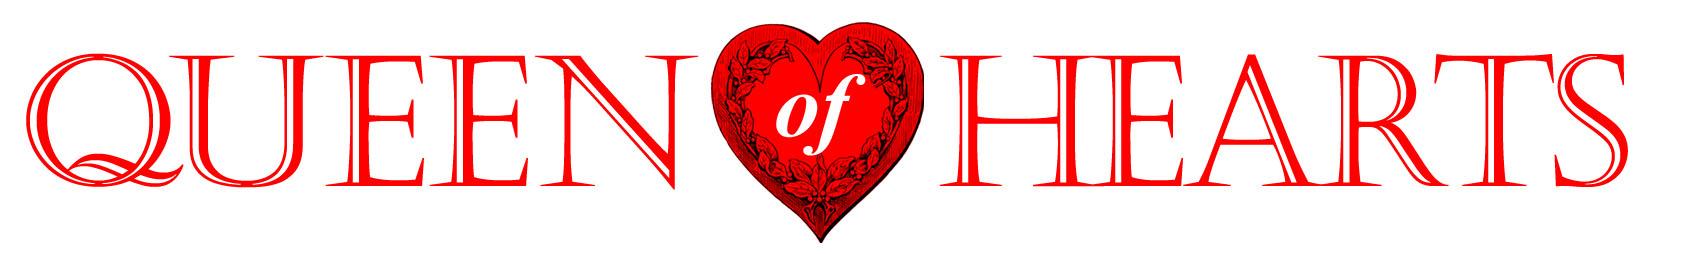 Queen of Hearts Red Logo - History of the Queen of Hearts - Bar & Restaurant in Lenwade, Norfolk